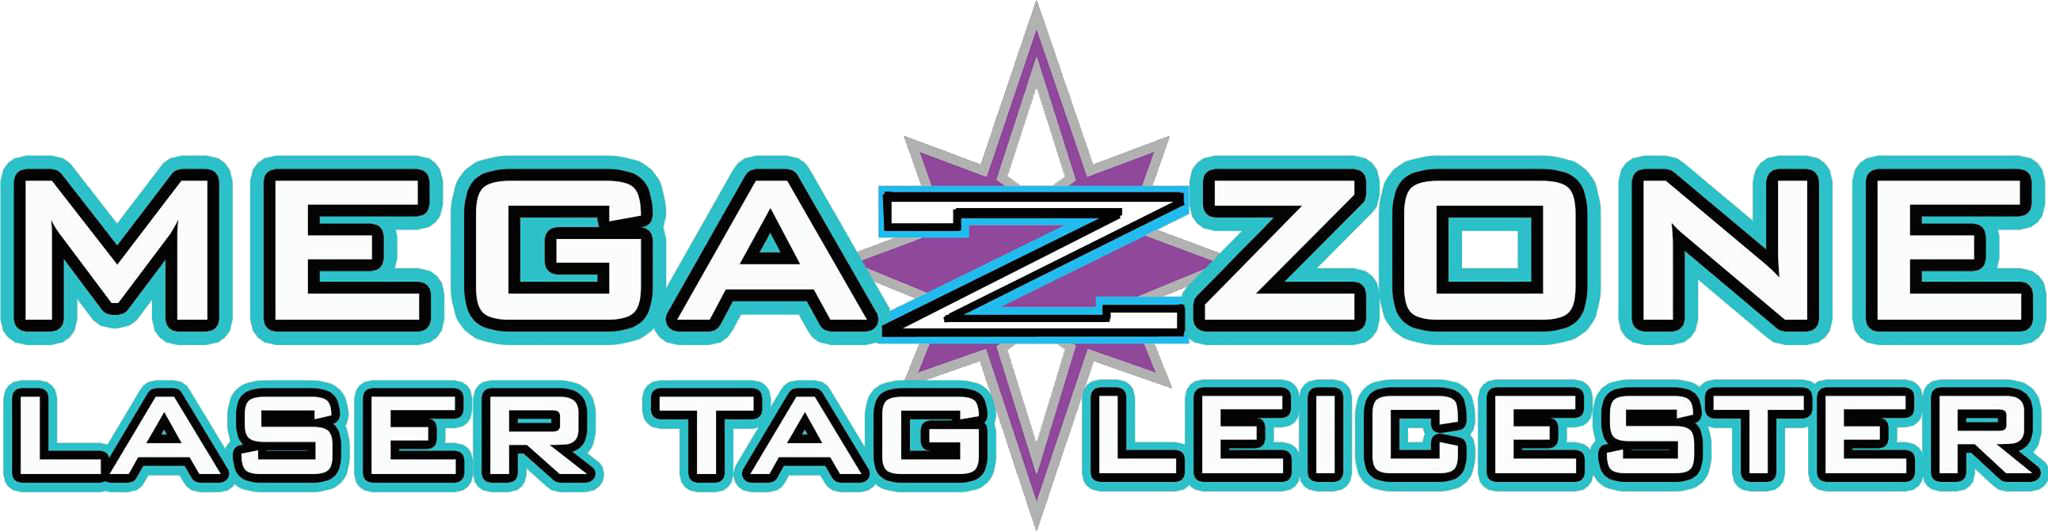 logo for Megazone Leicester